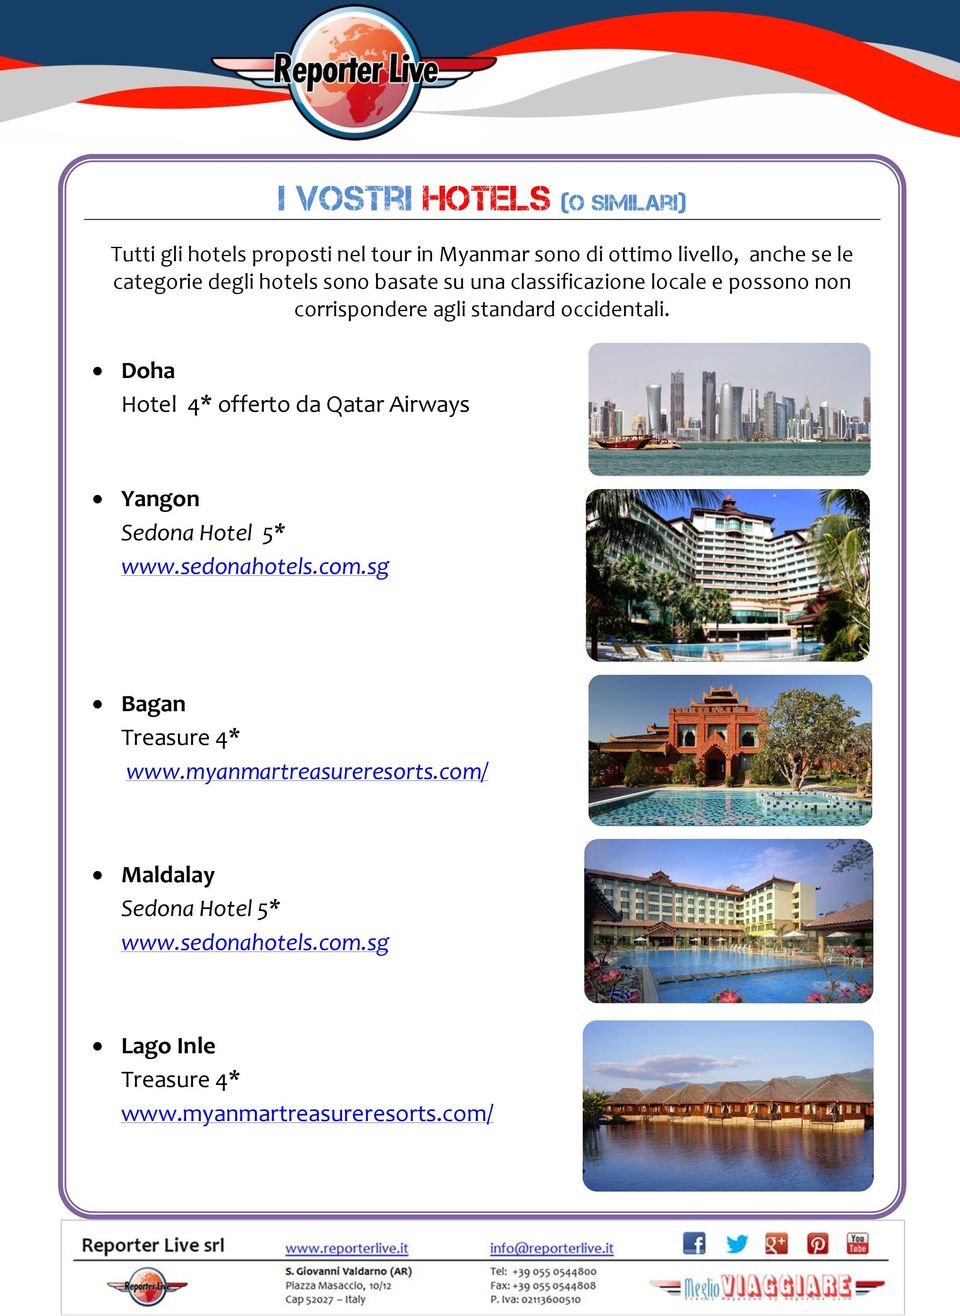 occidentali. Doha Hotel 4* offerto da Qatar Airways Yangon Sedona Hotel 5* www.sedonahotels.com.